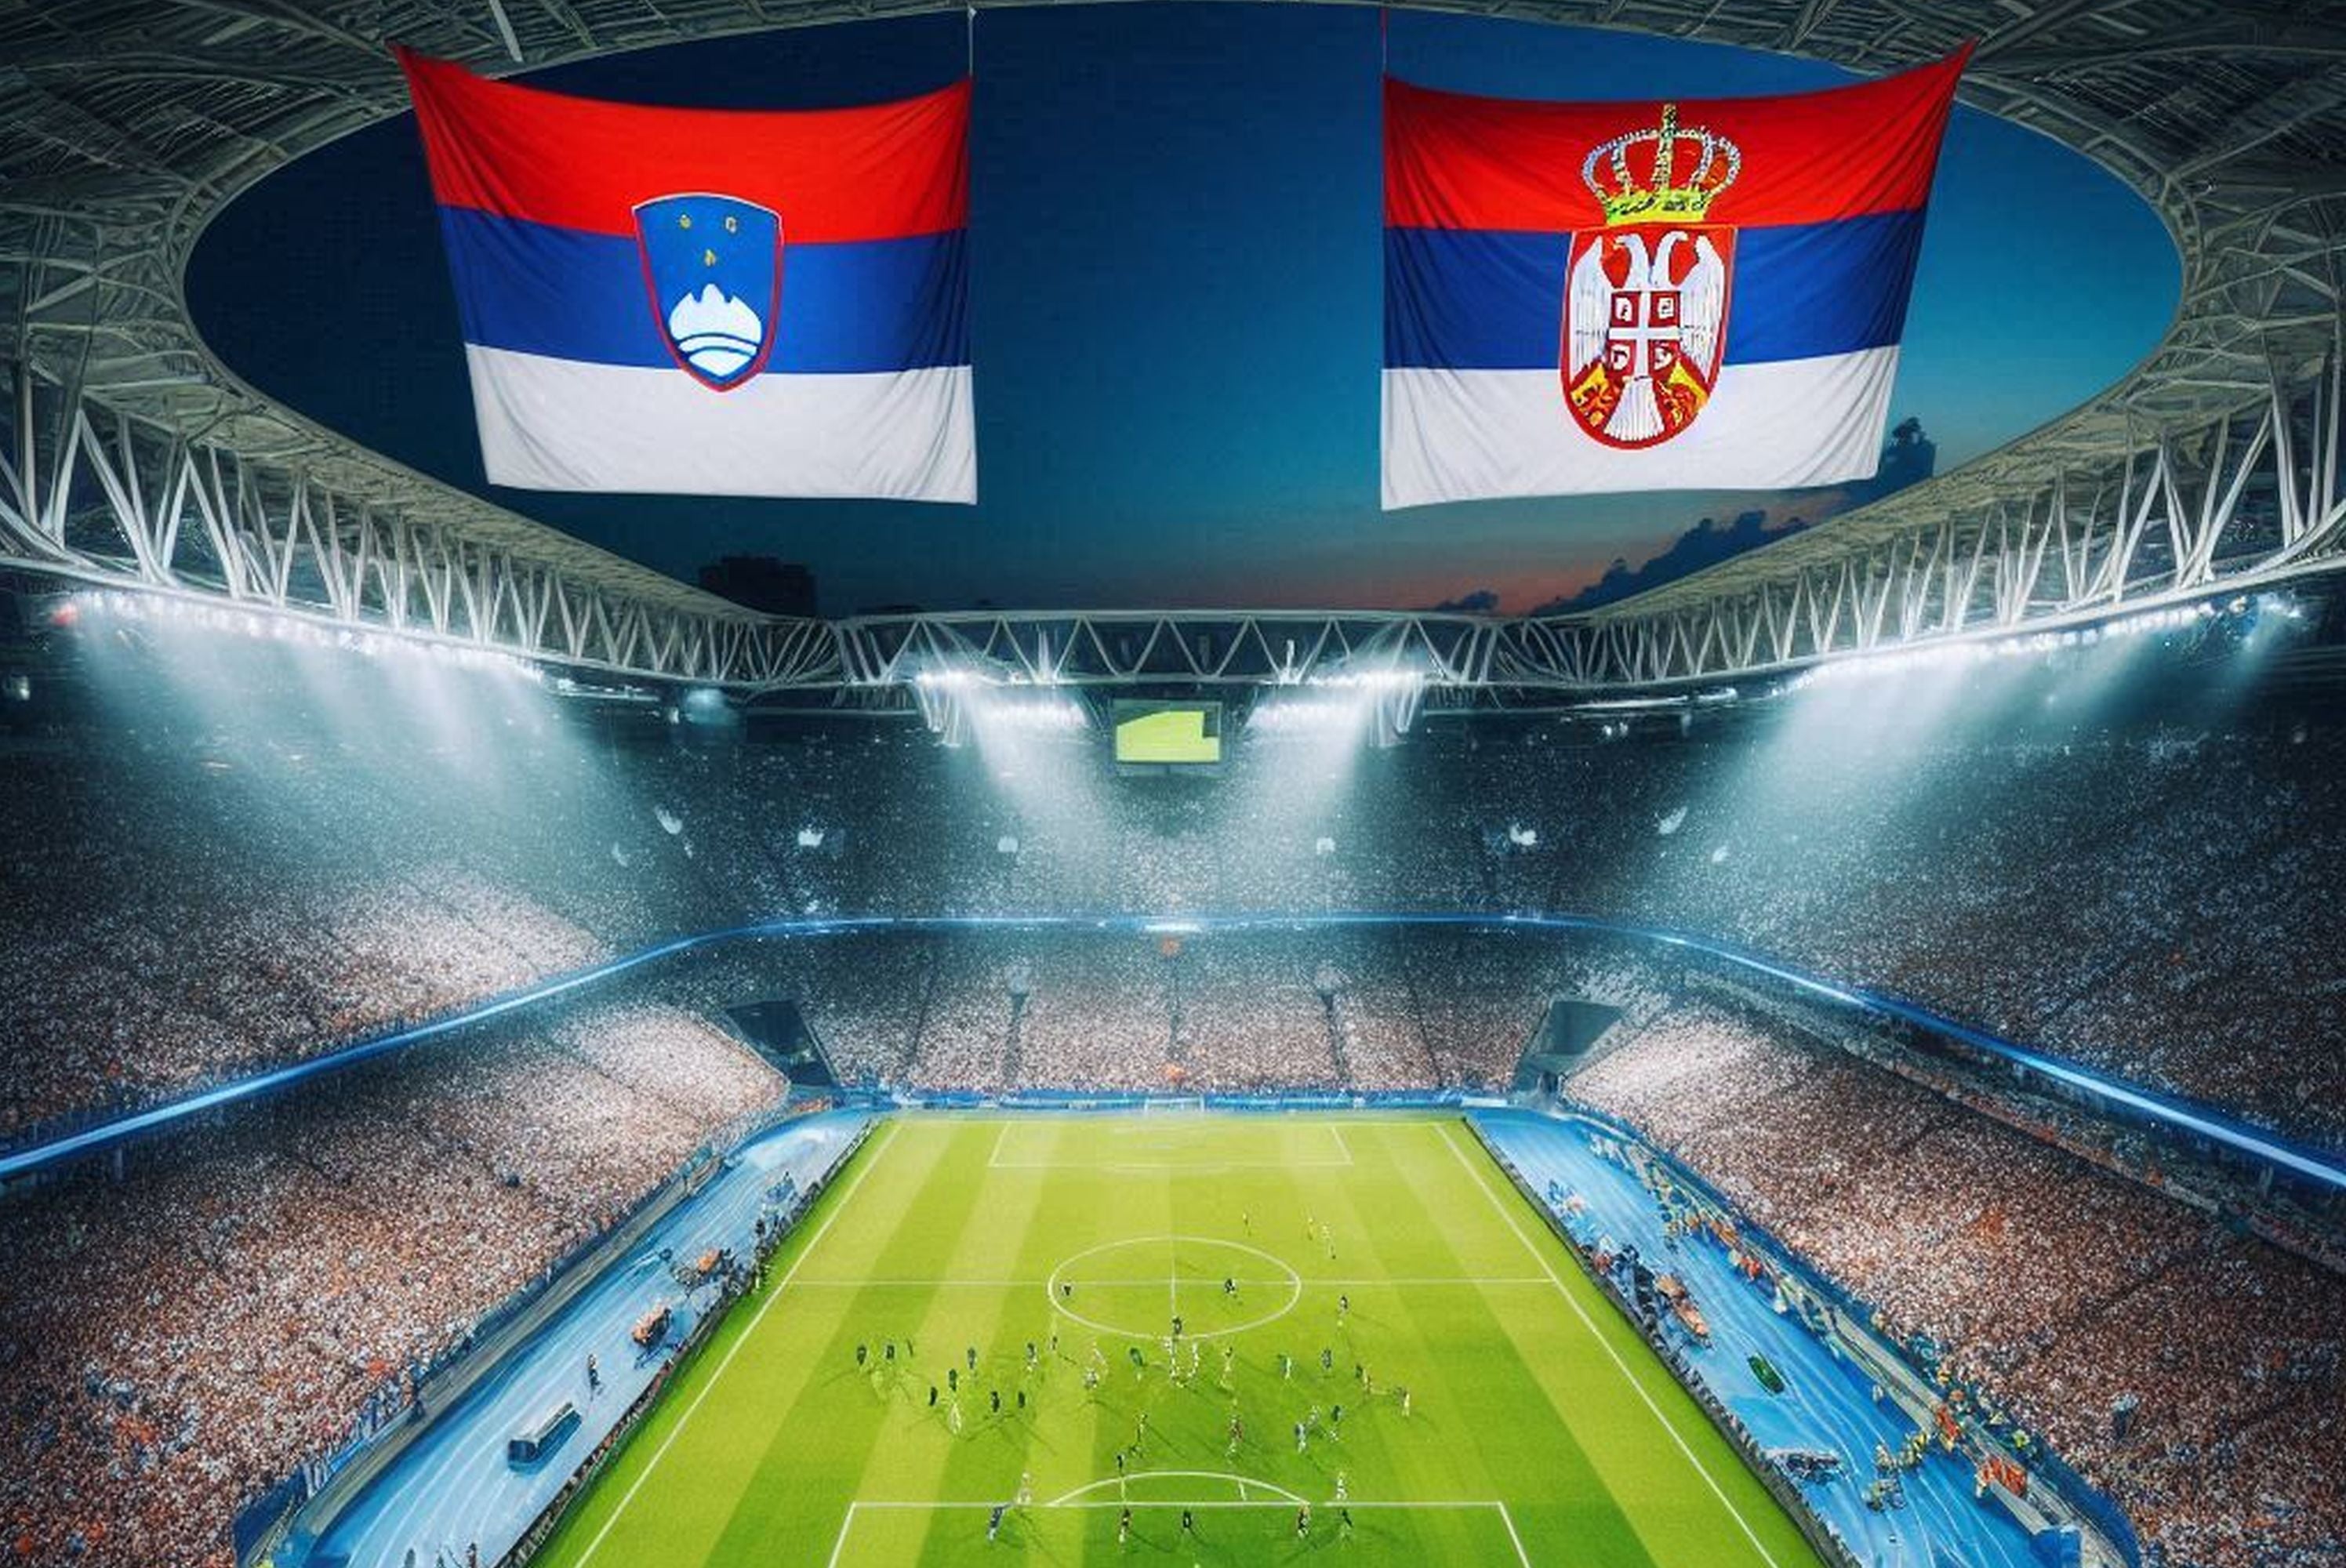 Slowenien gegen Serbien: Hier kannst du das Spiel sehen